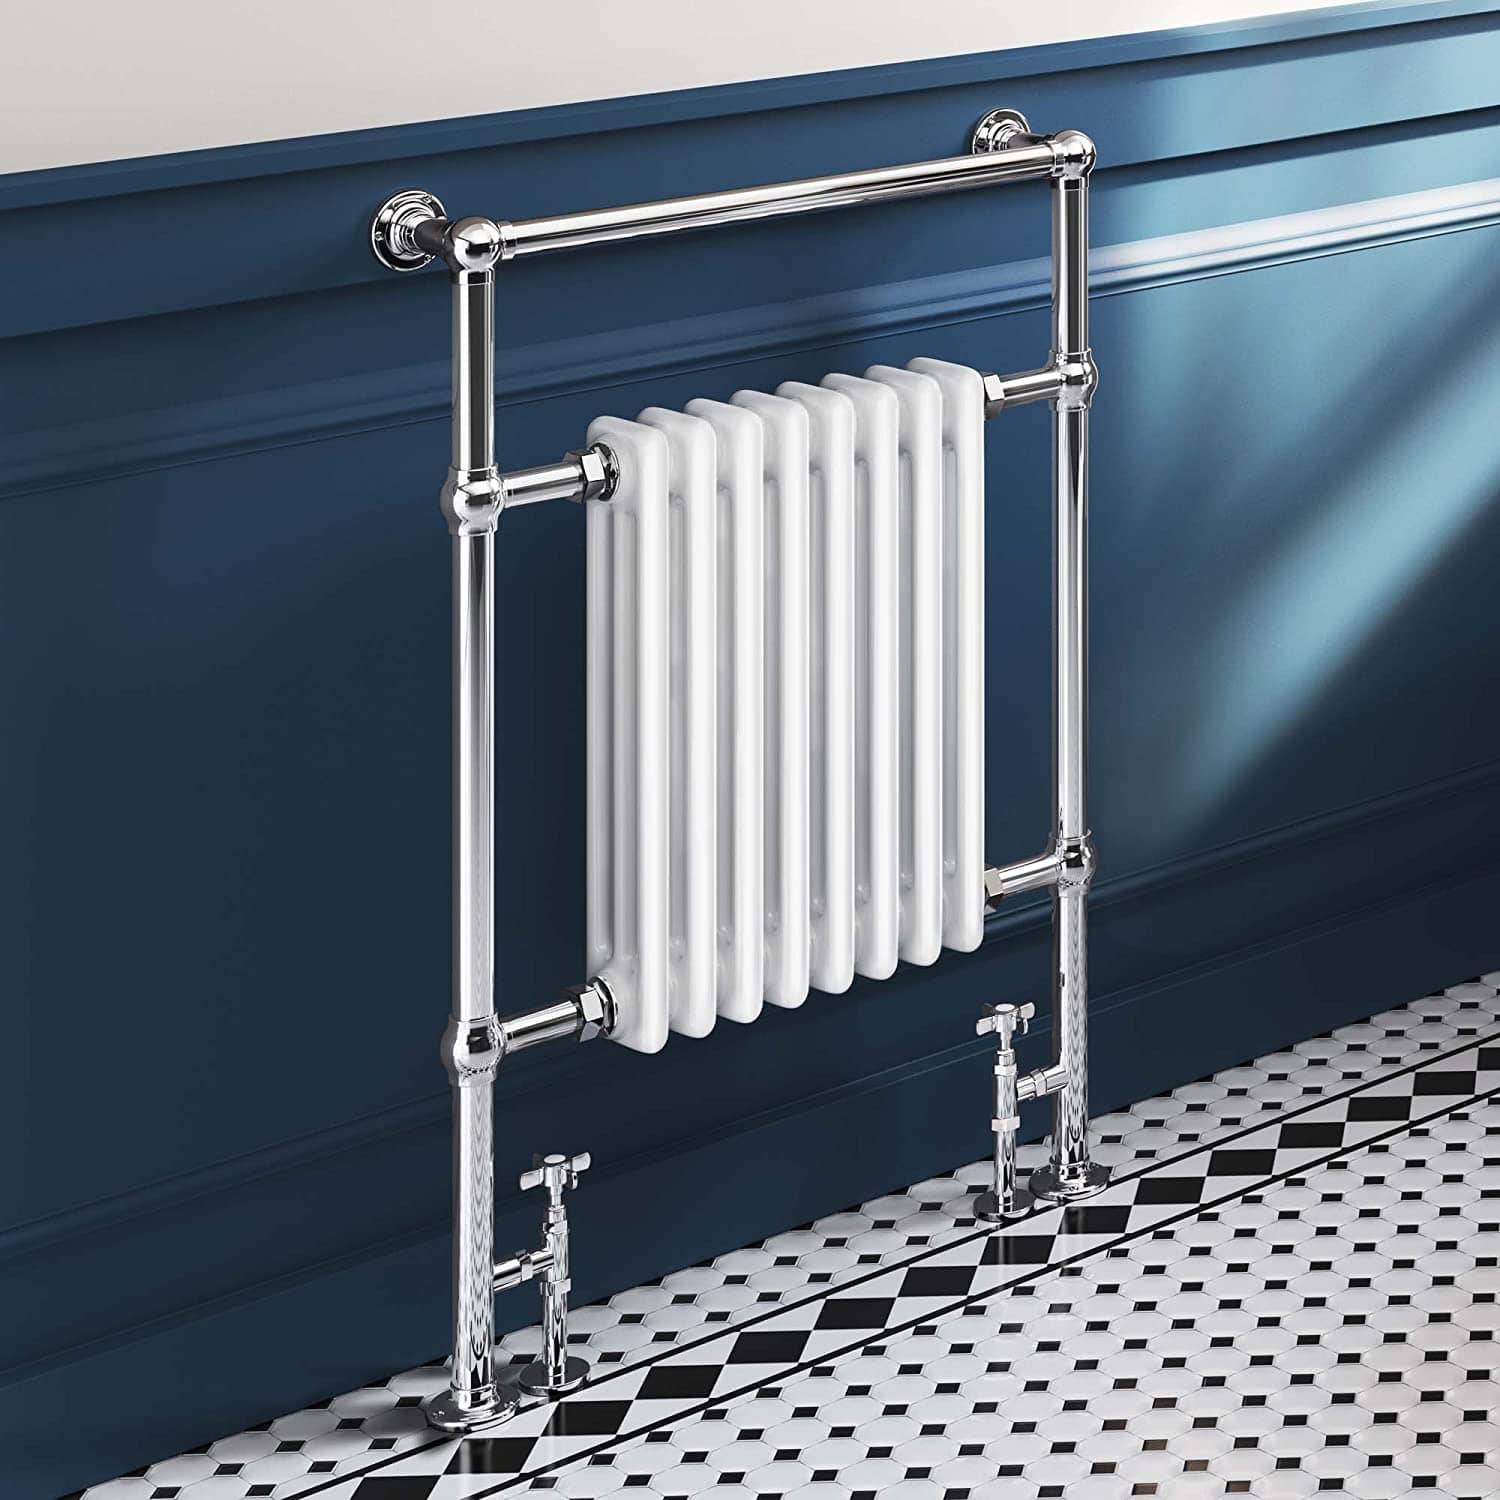 Bathroom4less Heating,Heated Towel Rails,Column Radiators 585mm x 952mm Vintage Vertical Heated Towel Radiator - 4 Column - Chrome&White